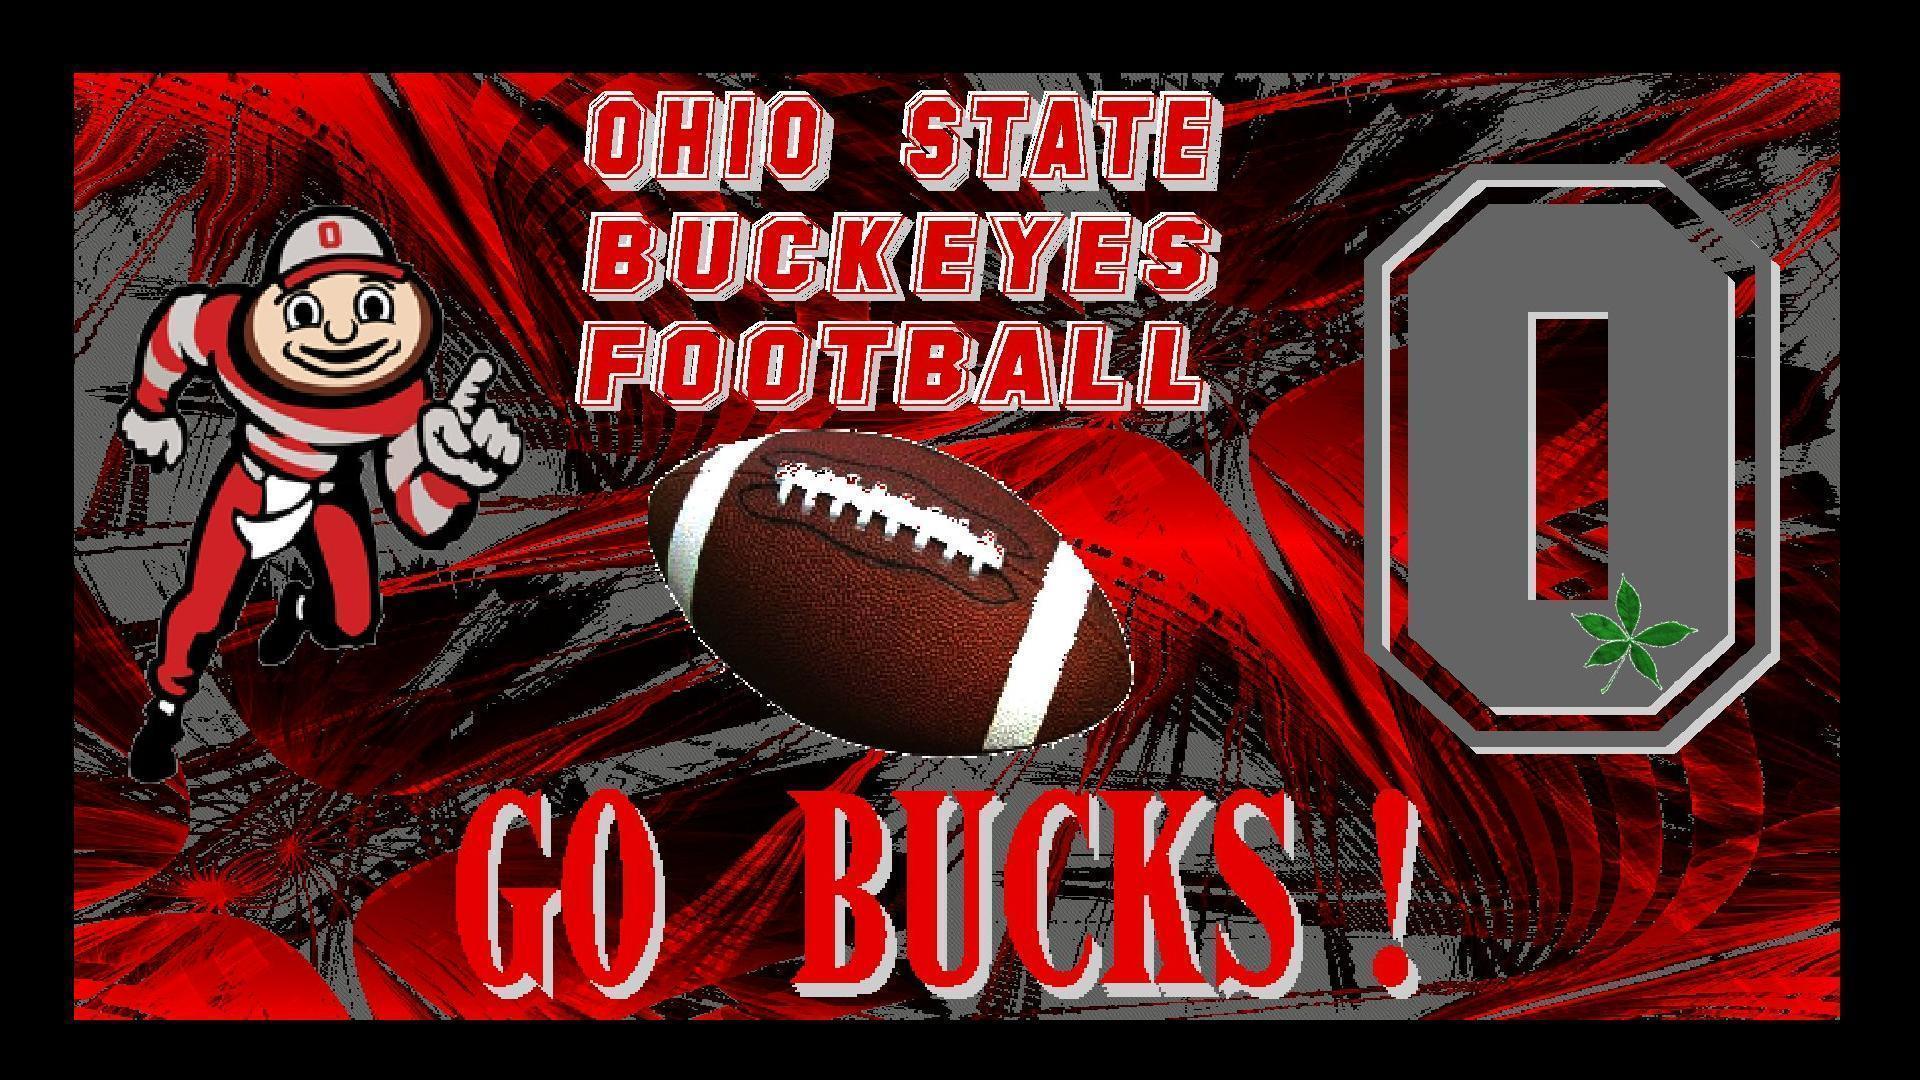 OHIO STATE BUCKEYES FOOTBALL, GO BUCKS! State Football